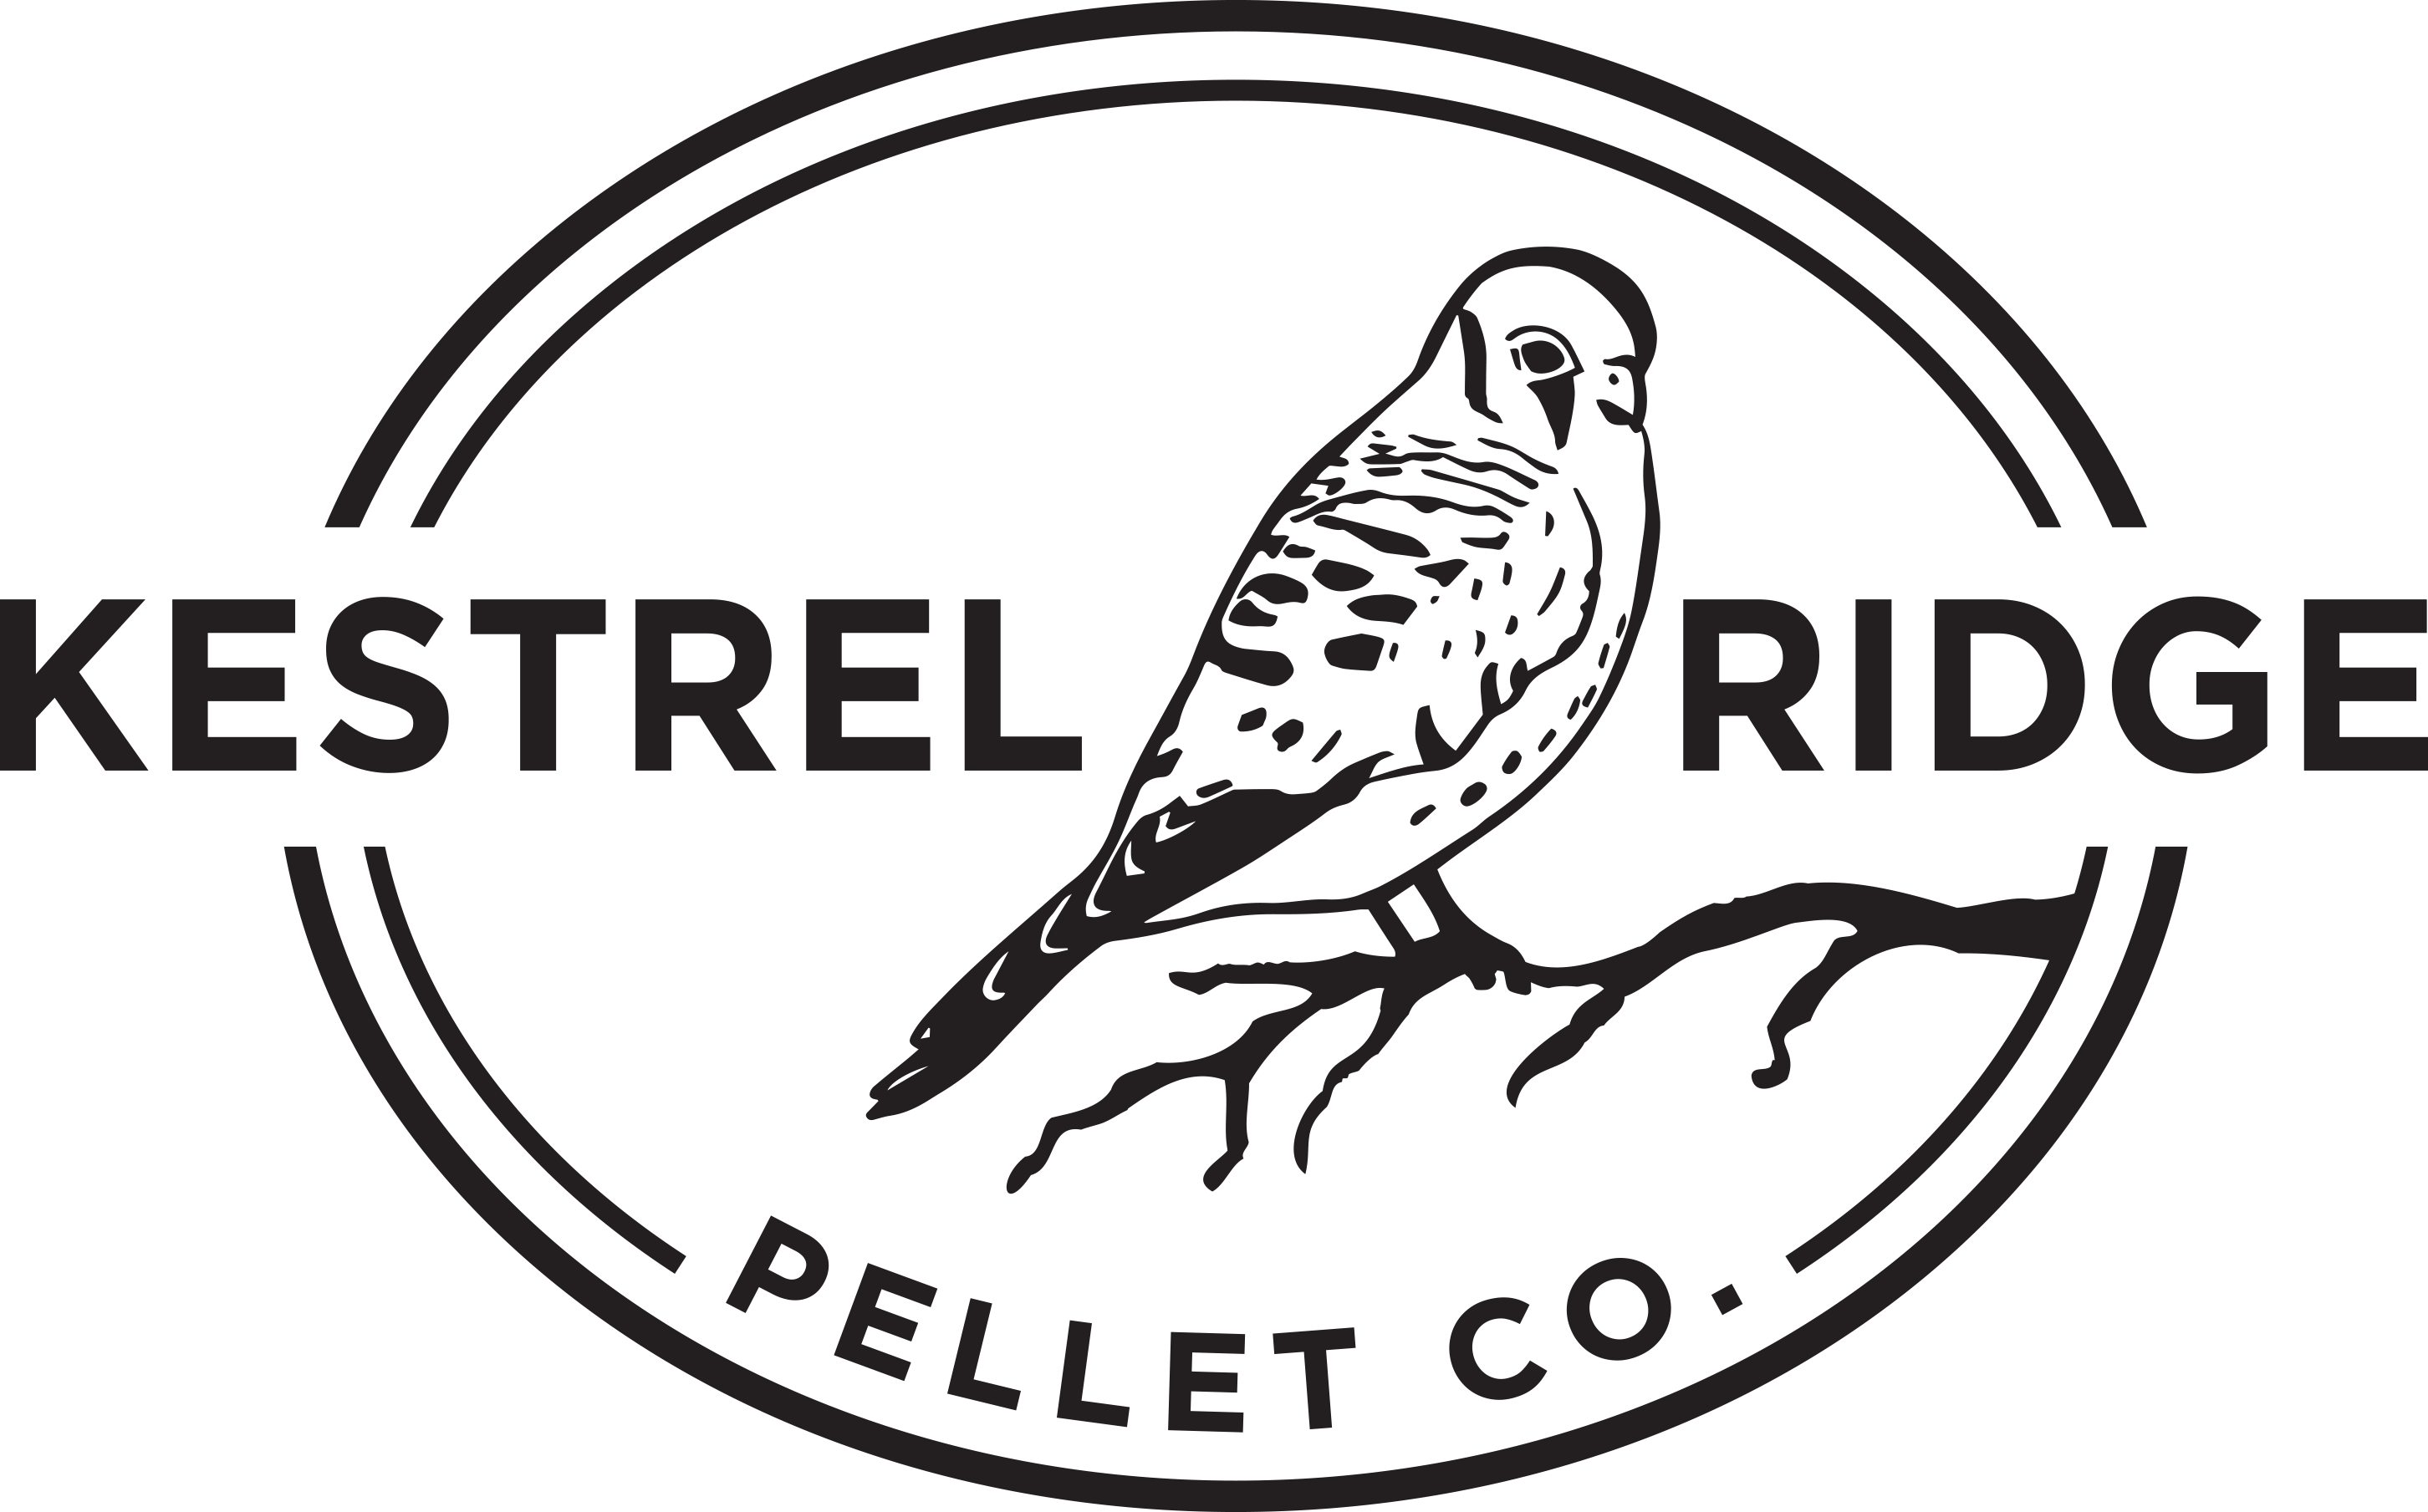 Kestrel Ridge Pellet Company, LLC